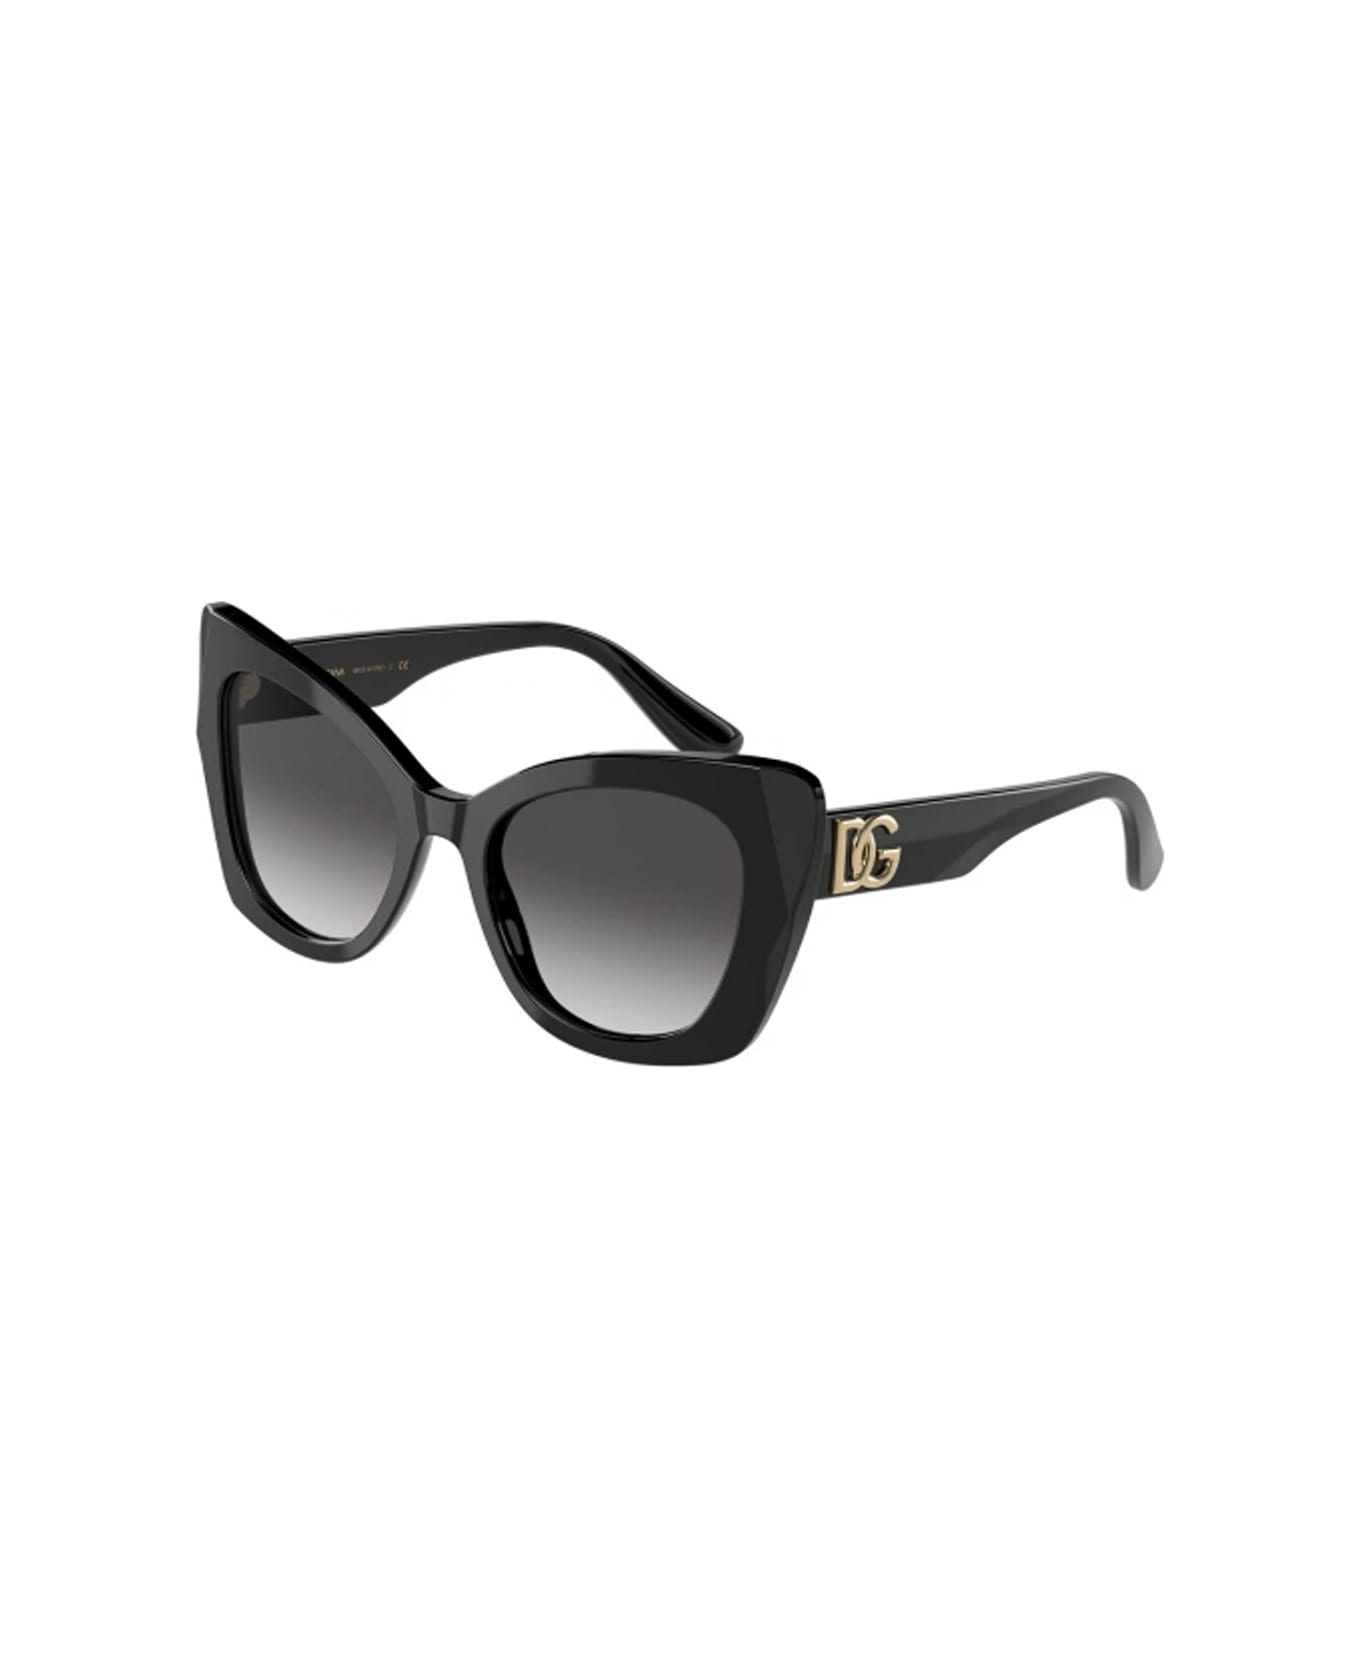 Dolce & Gabbana Eyewear Dg4405 501/8g Sunglasses - Nero サングラス